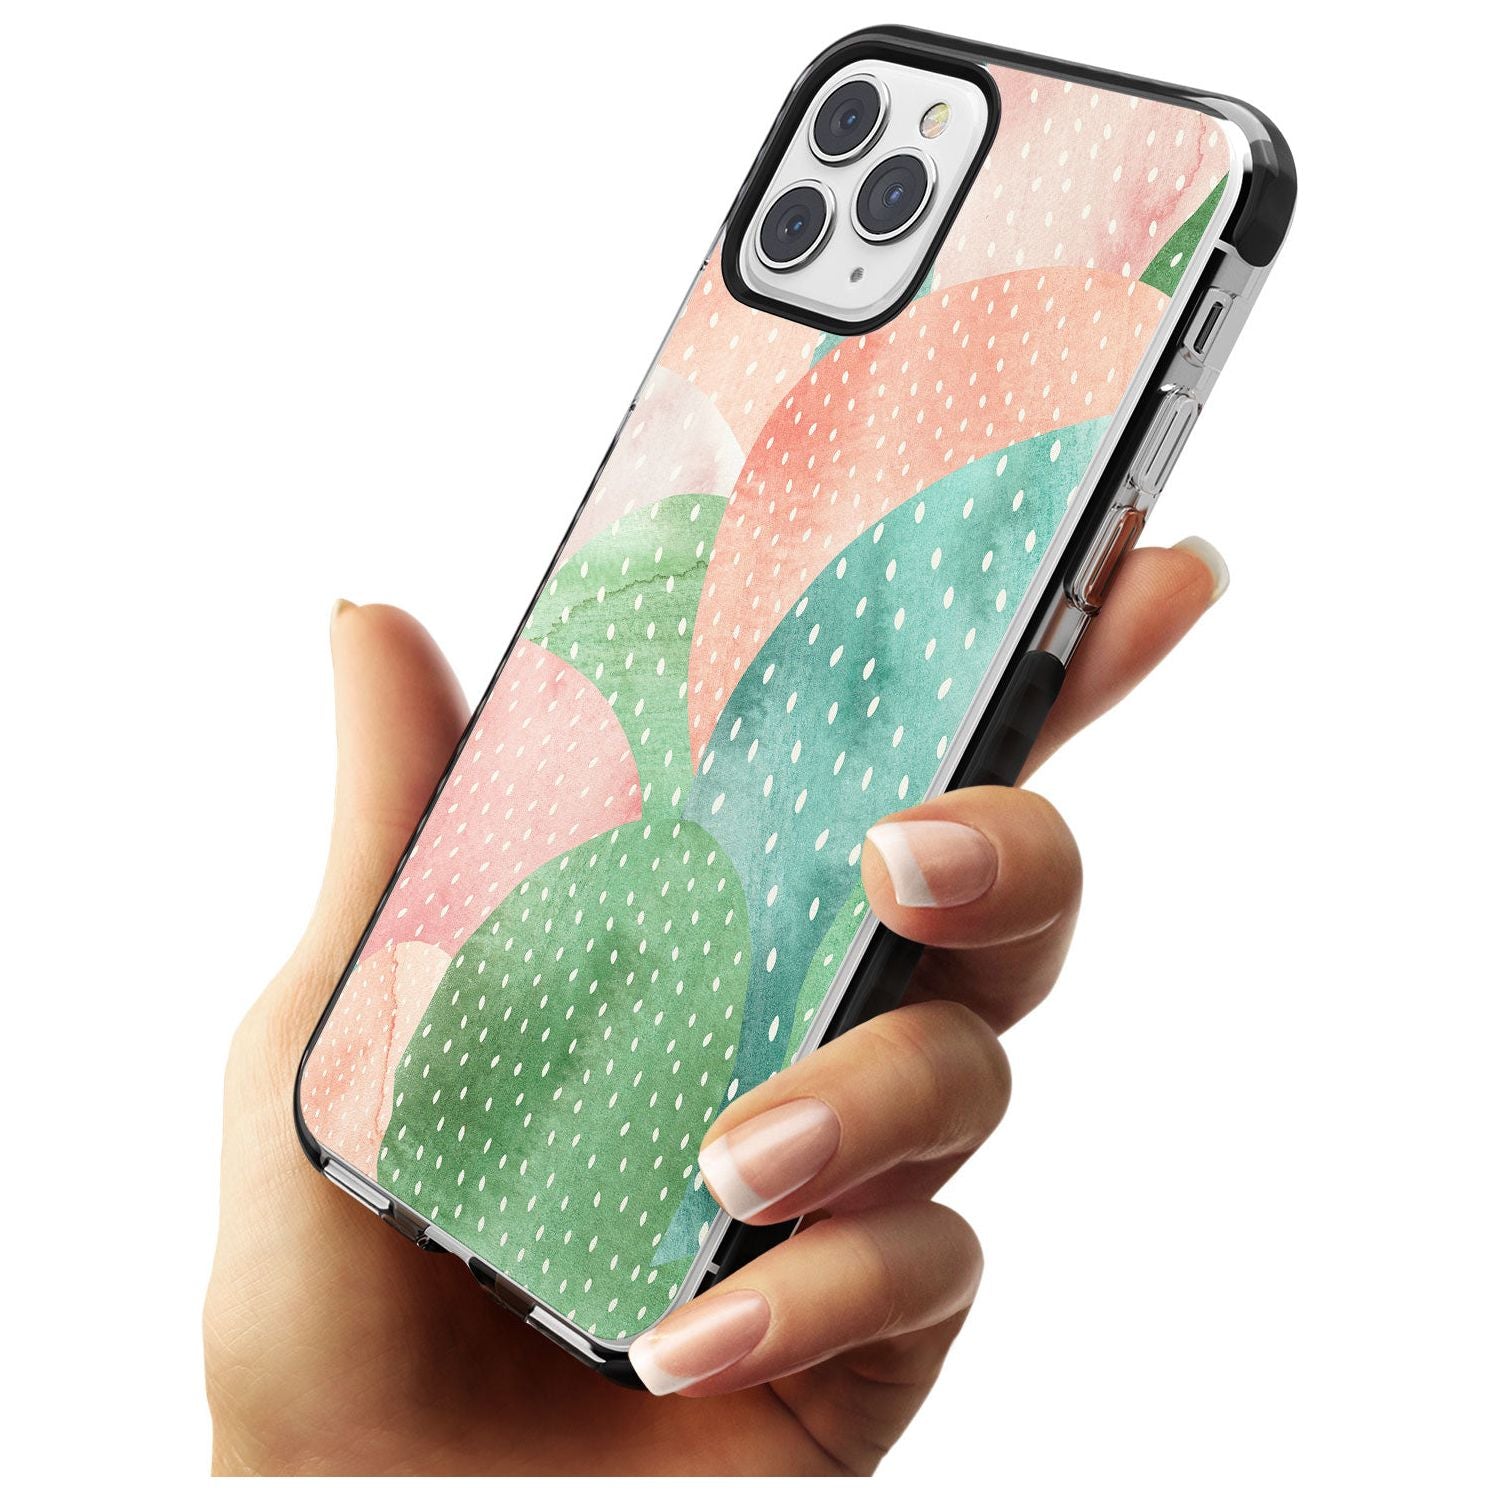 Colourful Close-Up Cacti Design Black Impact Phone Case for iPhone 11 Pro Max